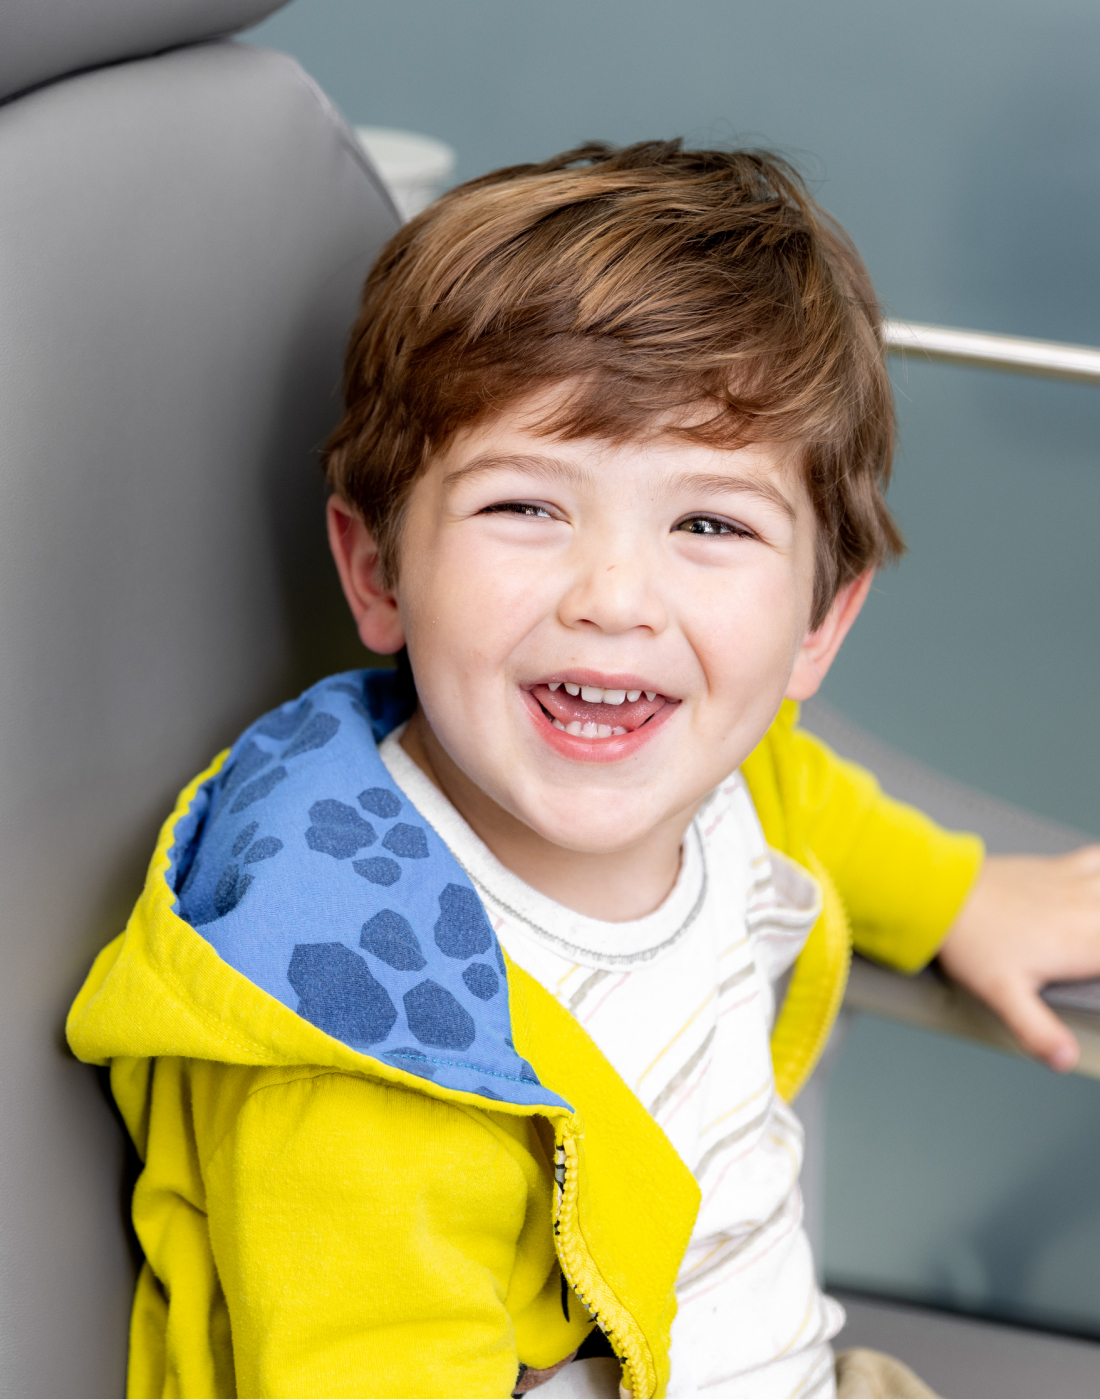 Birmingham pediatric dentistry model smiling